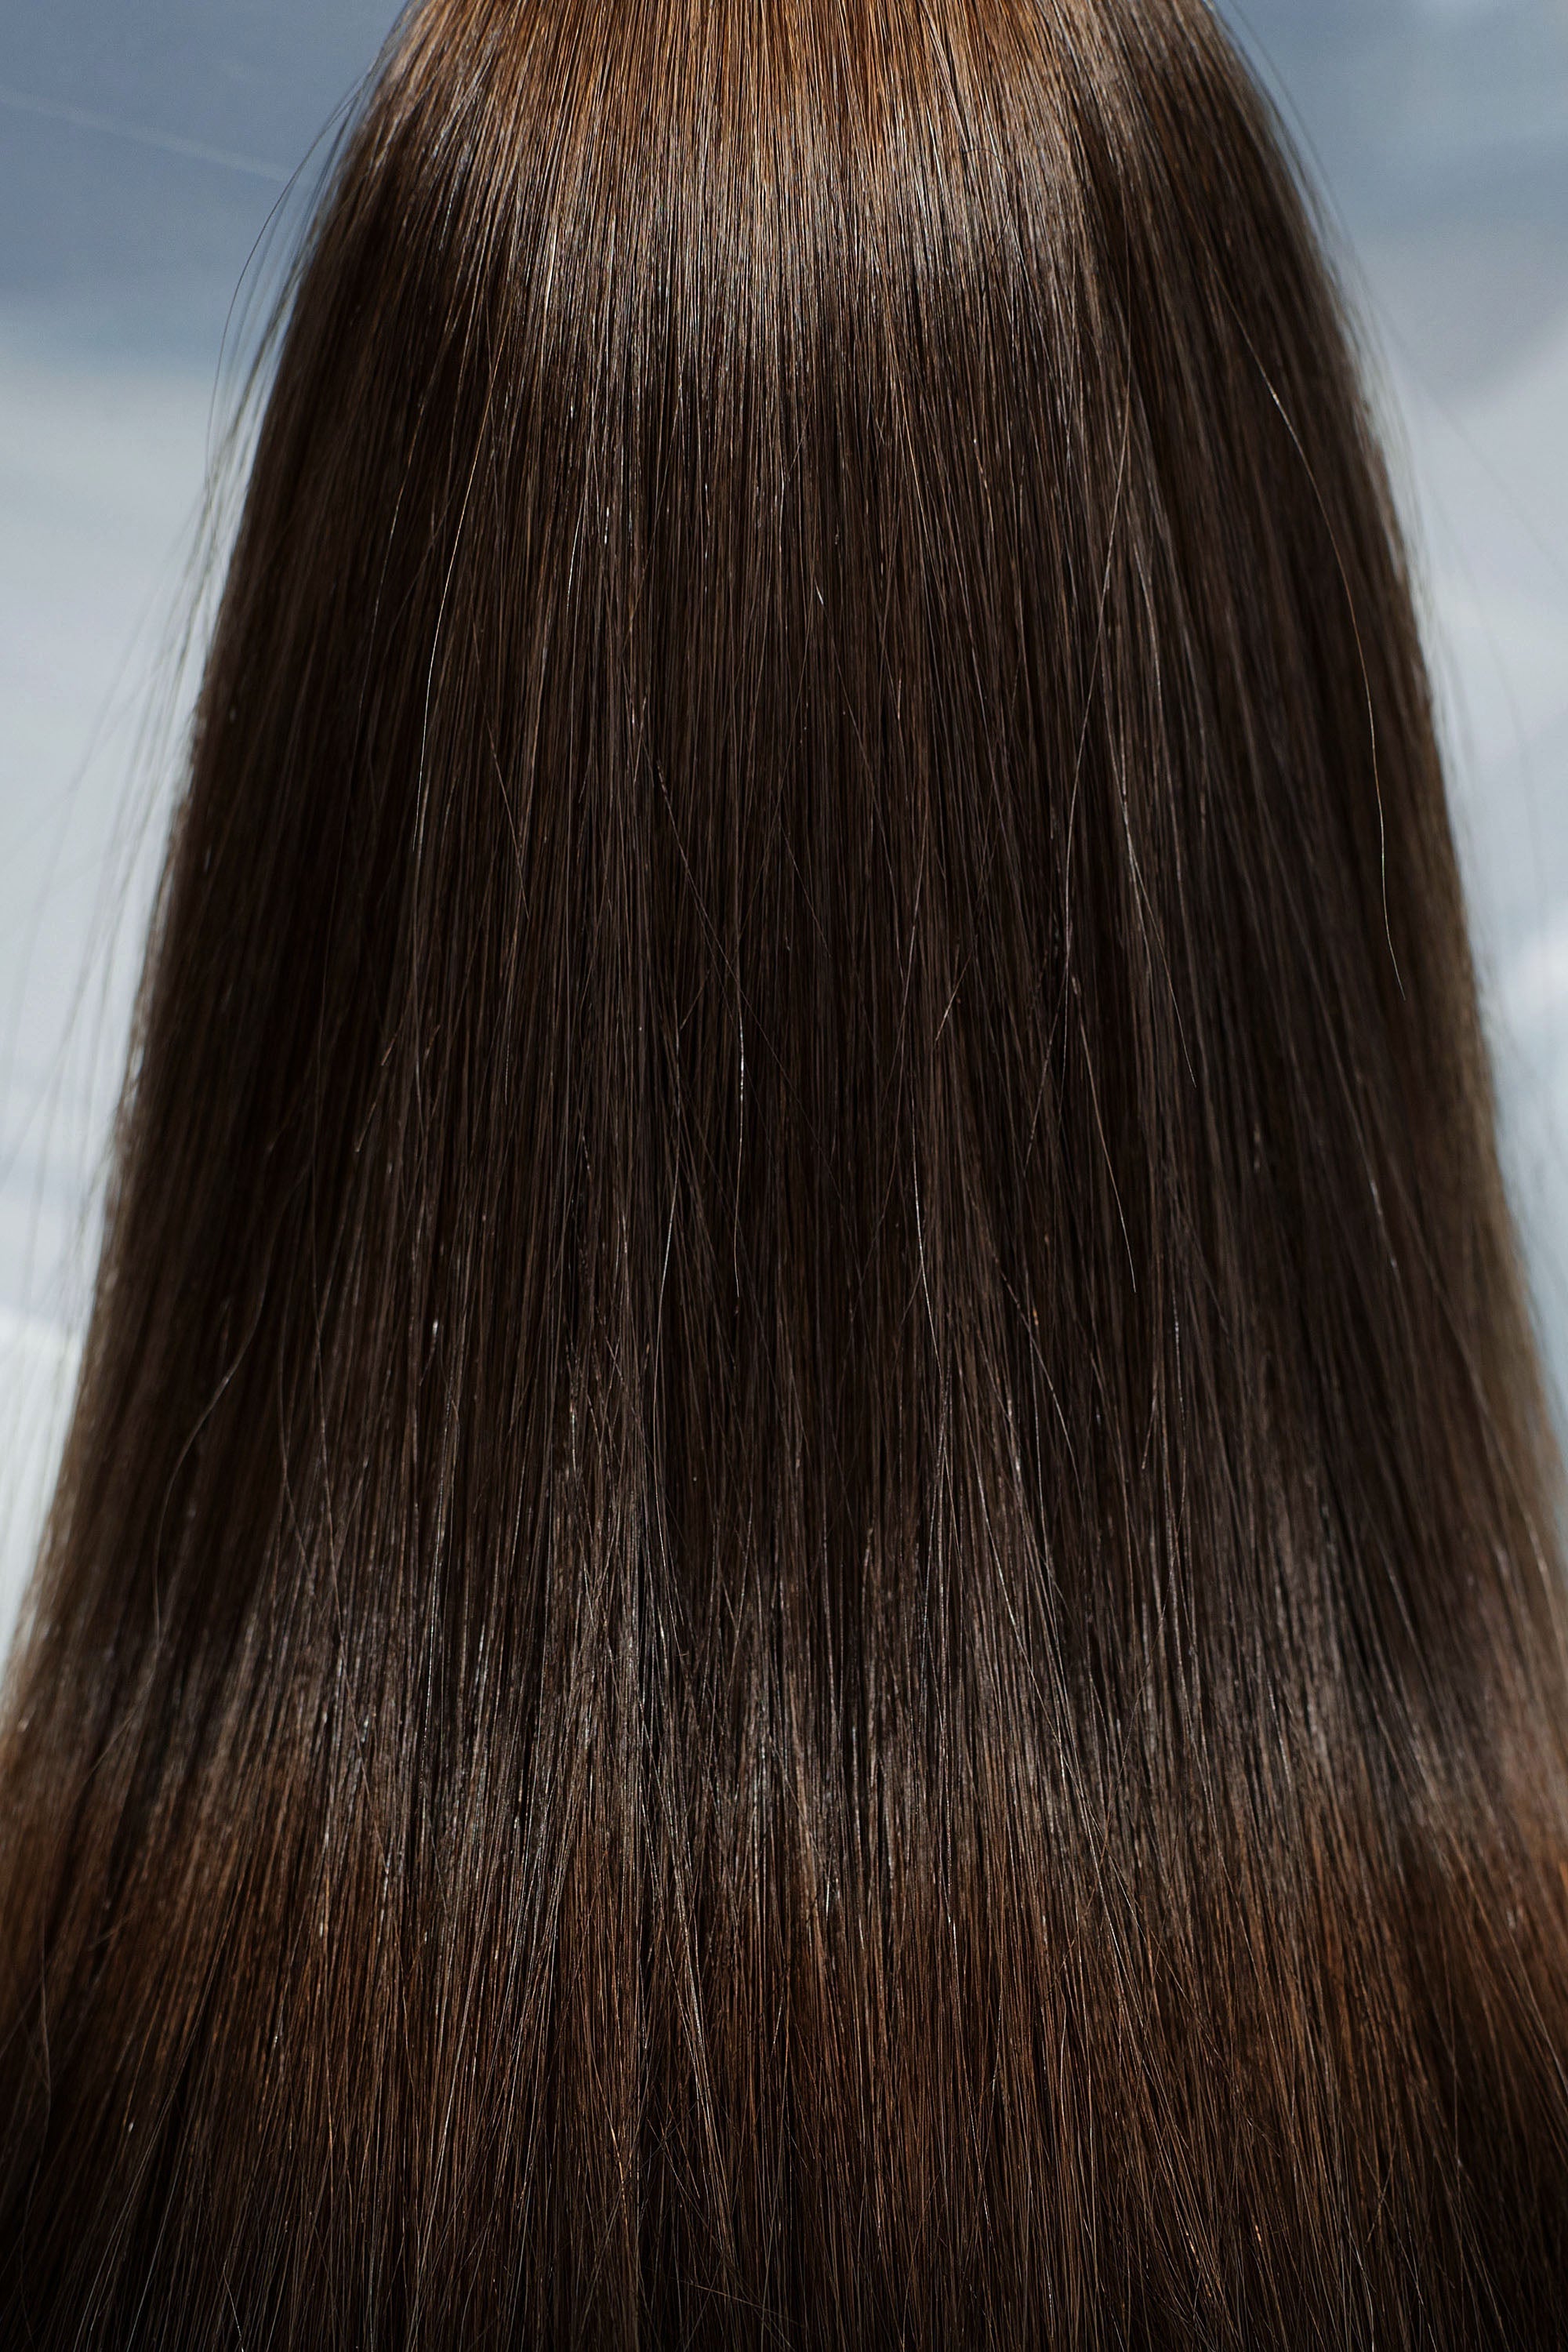 Behair professional Keratin Tip "Premium" 26" (65cm) Natural Straight Light Brown #4 - 25g (Micro - 0.5g each pcs) hair extensions